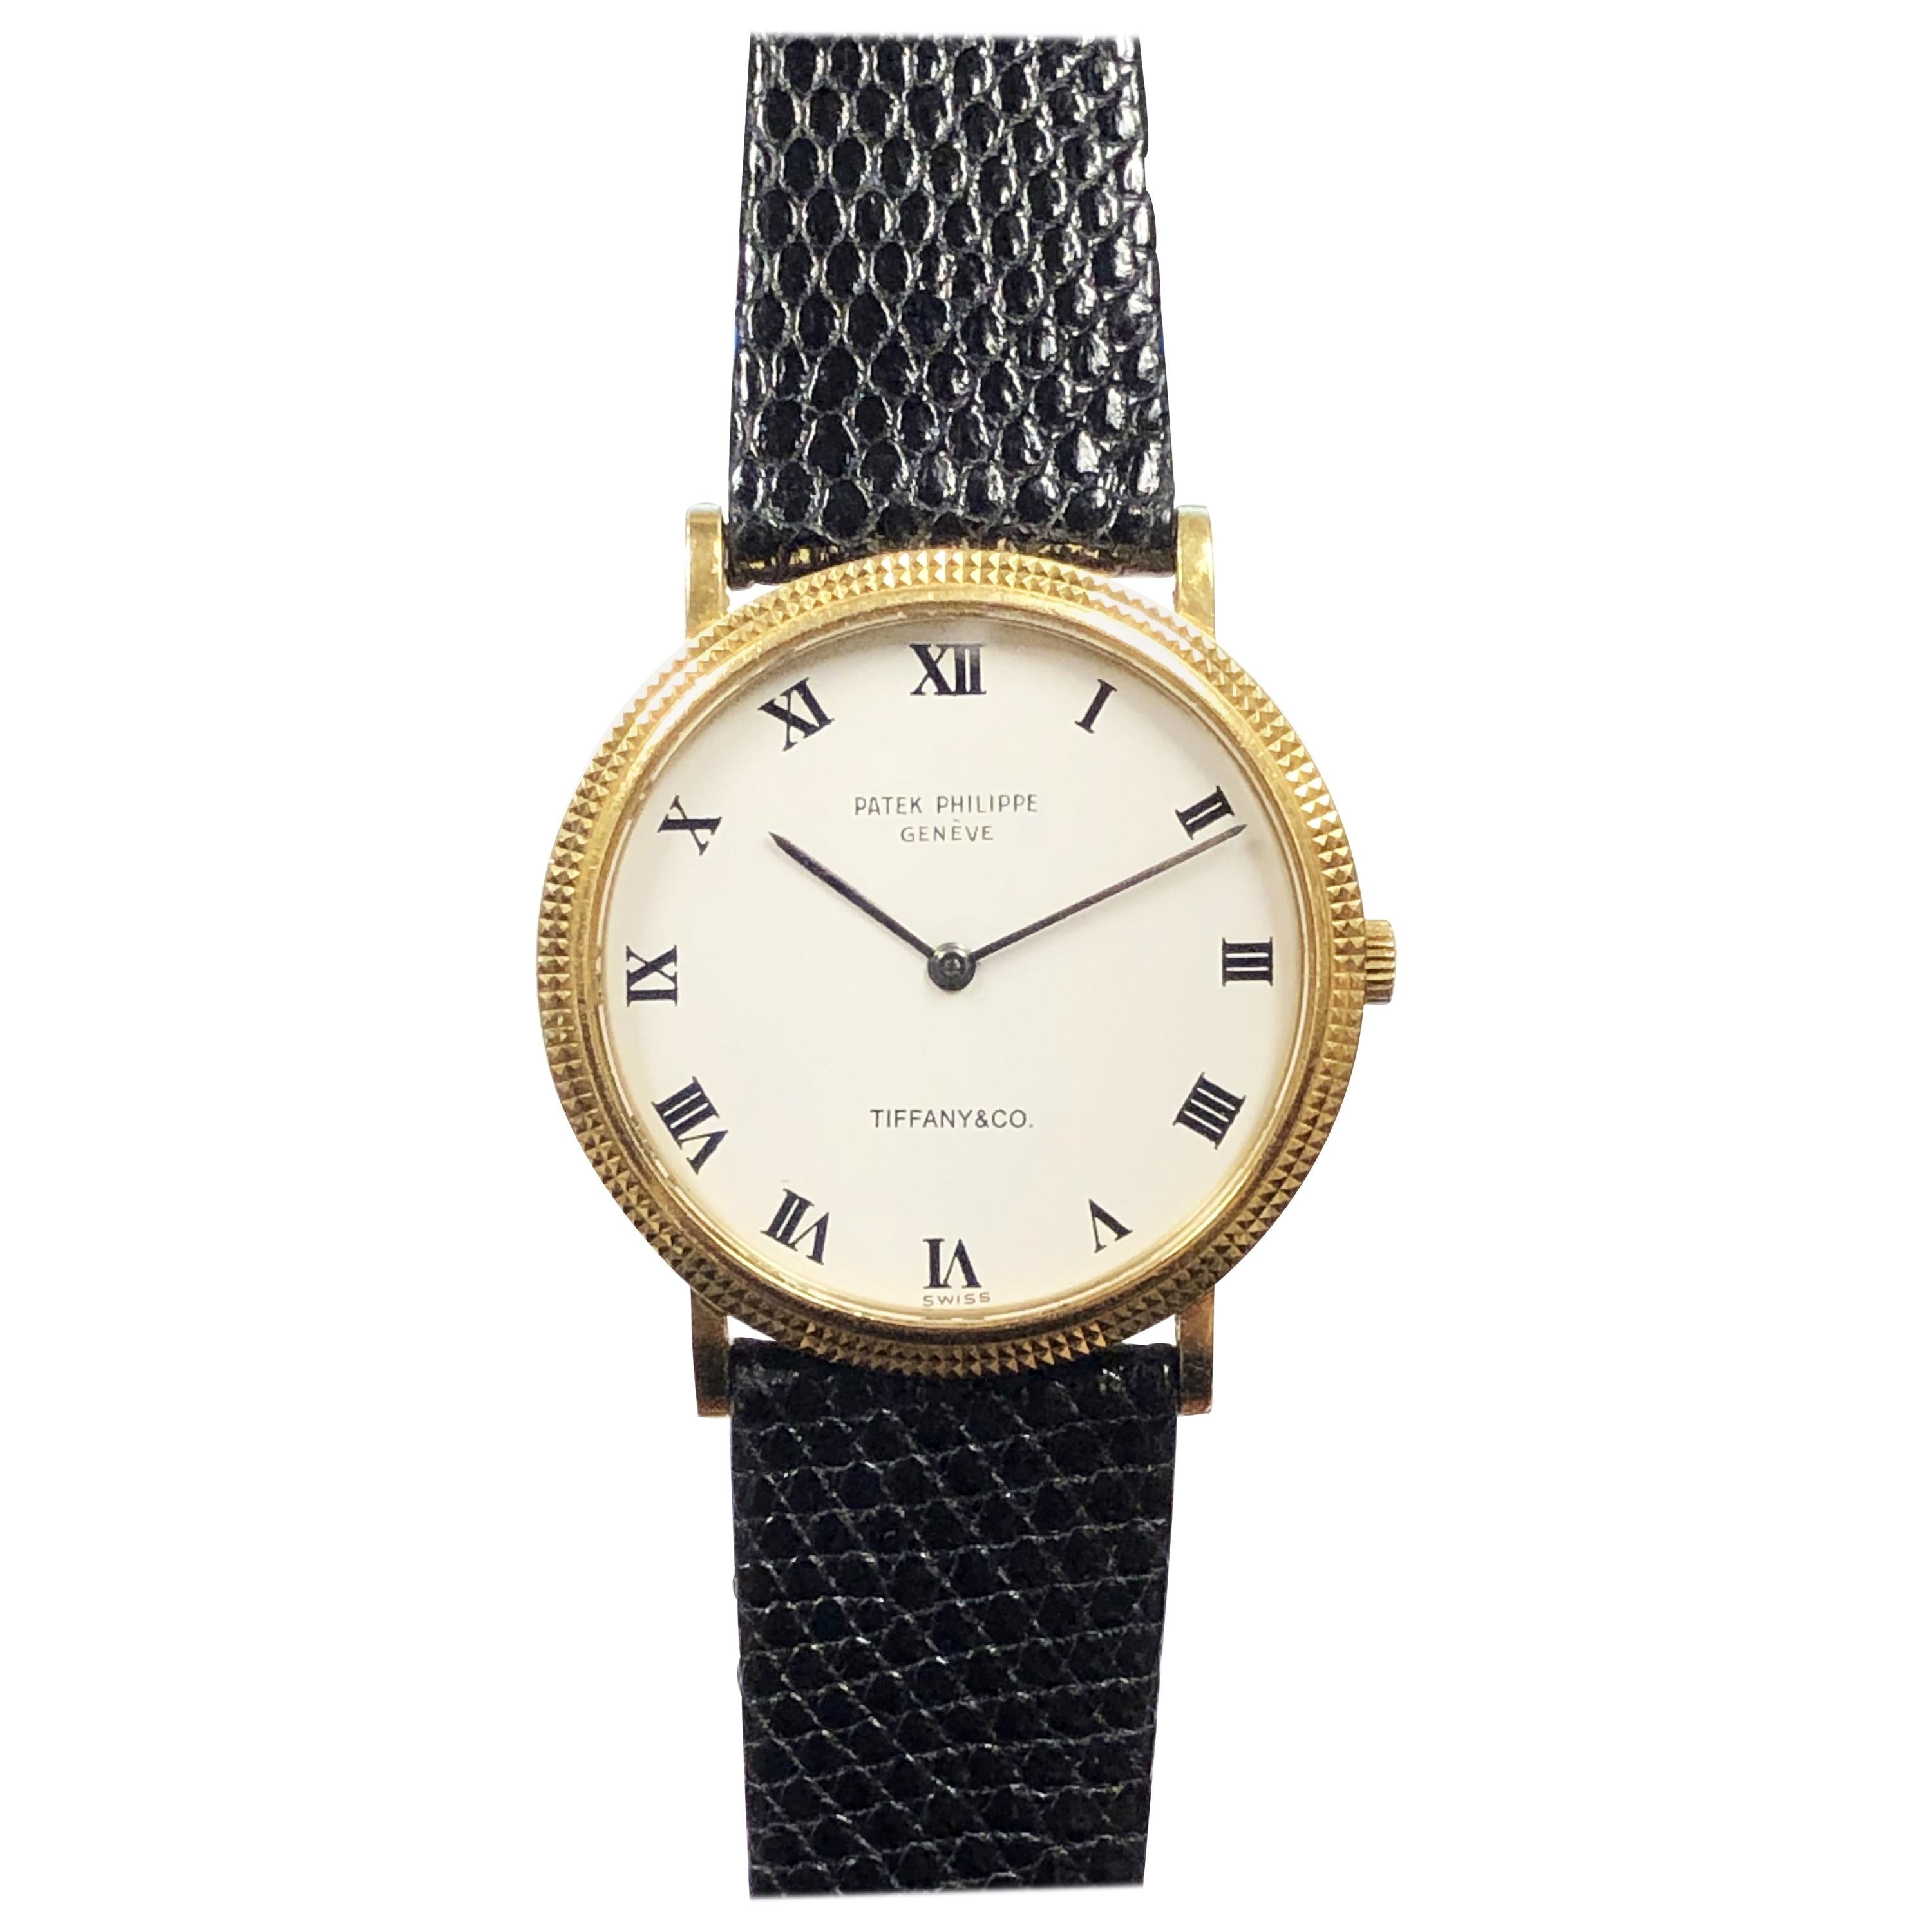 Patek Philippe 3954 Calatrava Yellow Gold Tiffany & Co. Classic Wrist Watch